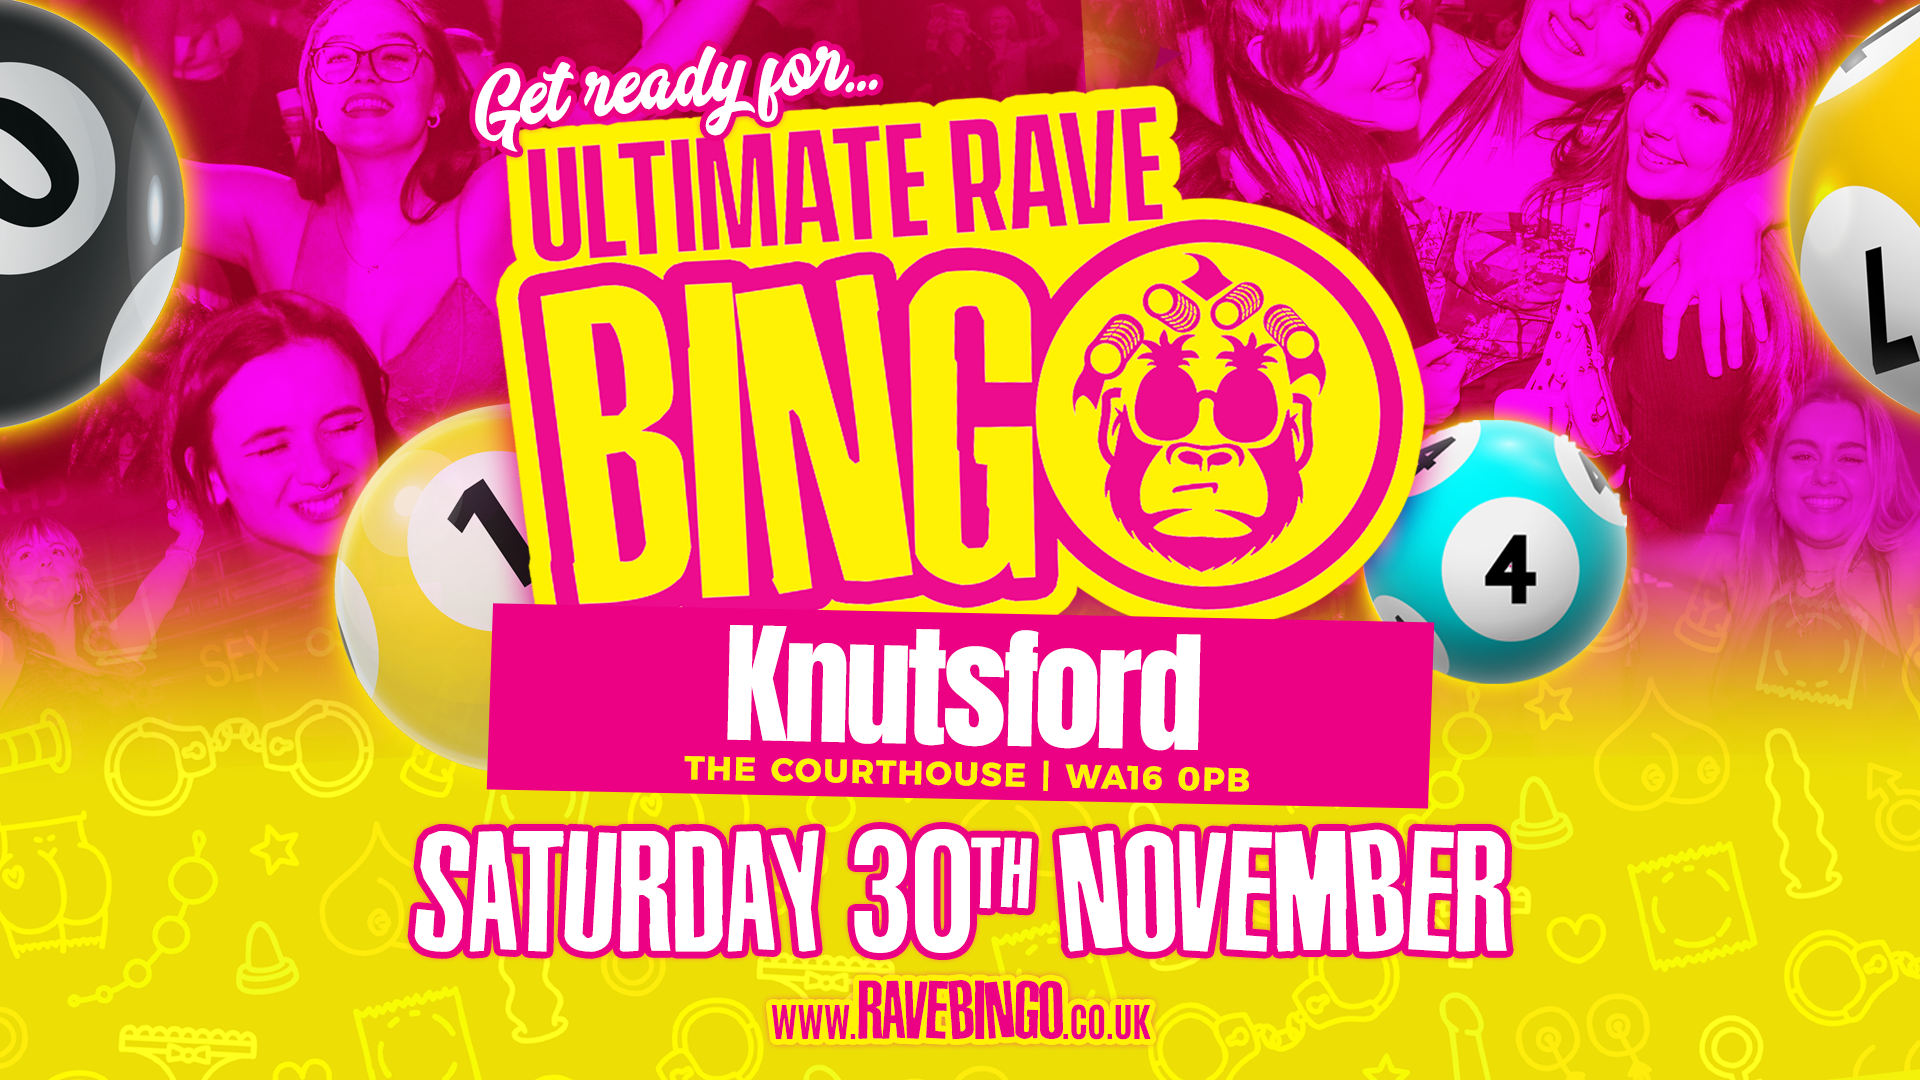 Ultimate Rave Bingo // Knutsford // Friday 30th November